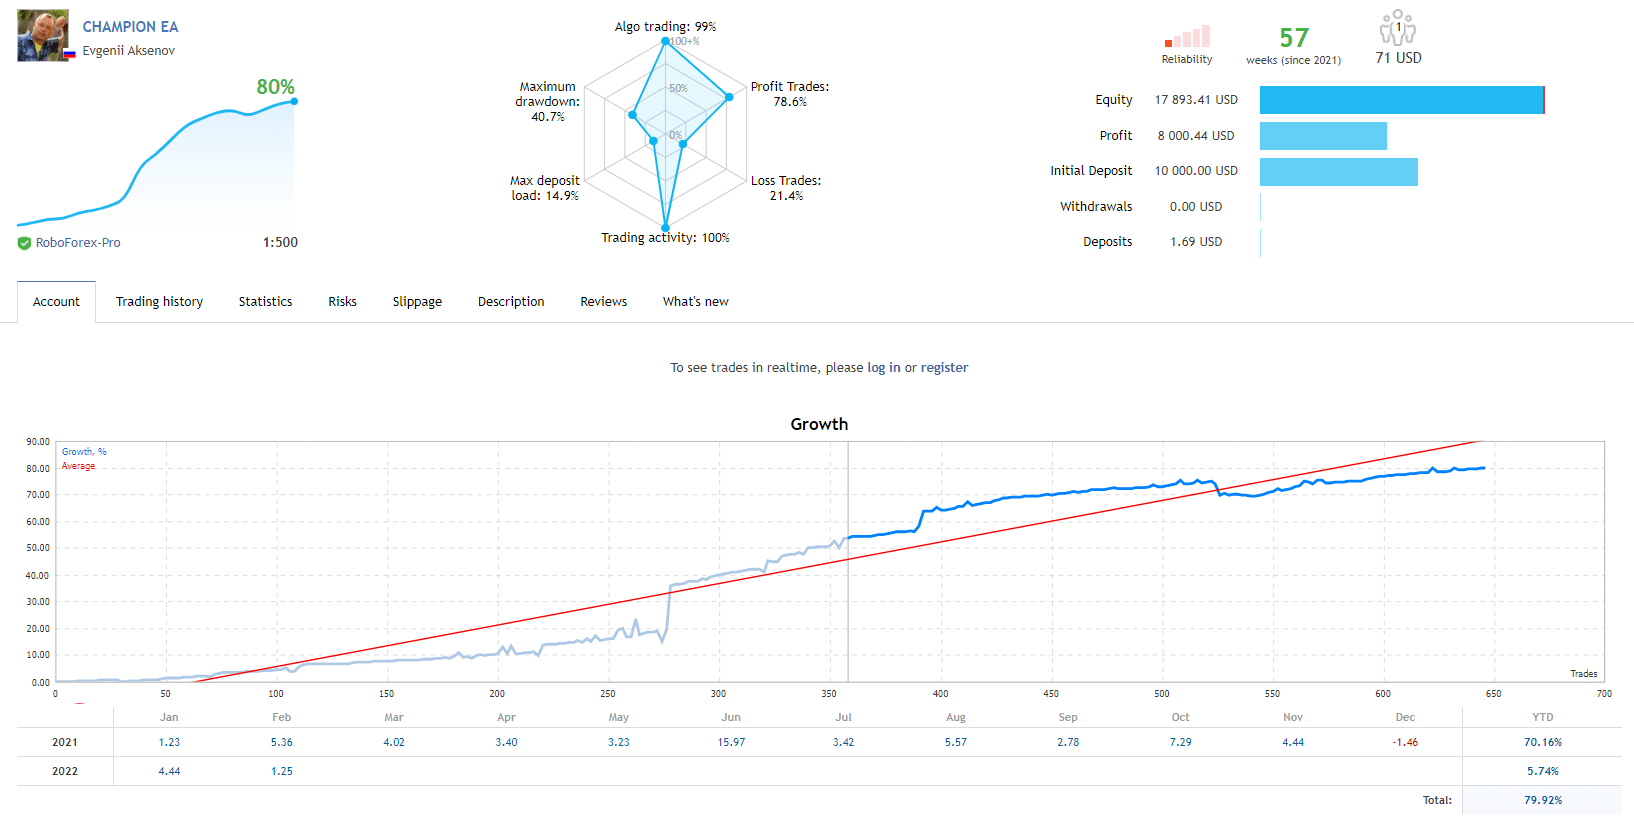 Growth chart of Champion EA on MQL5